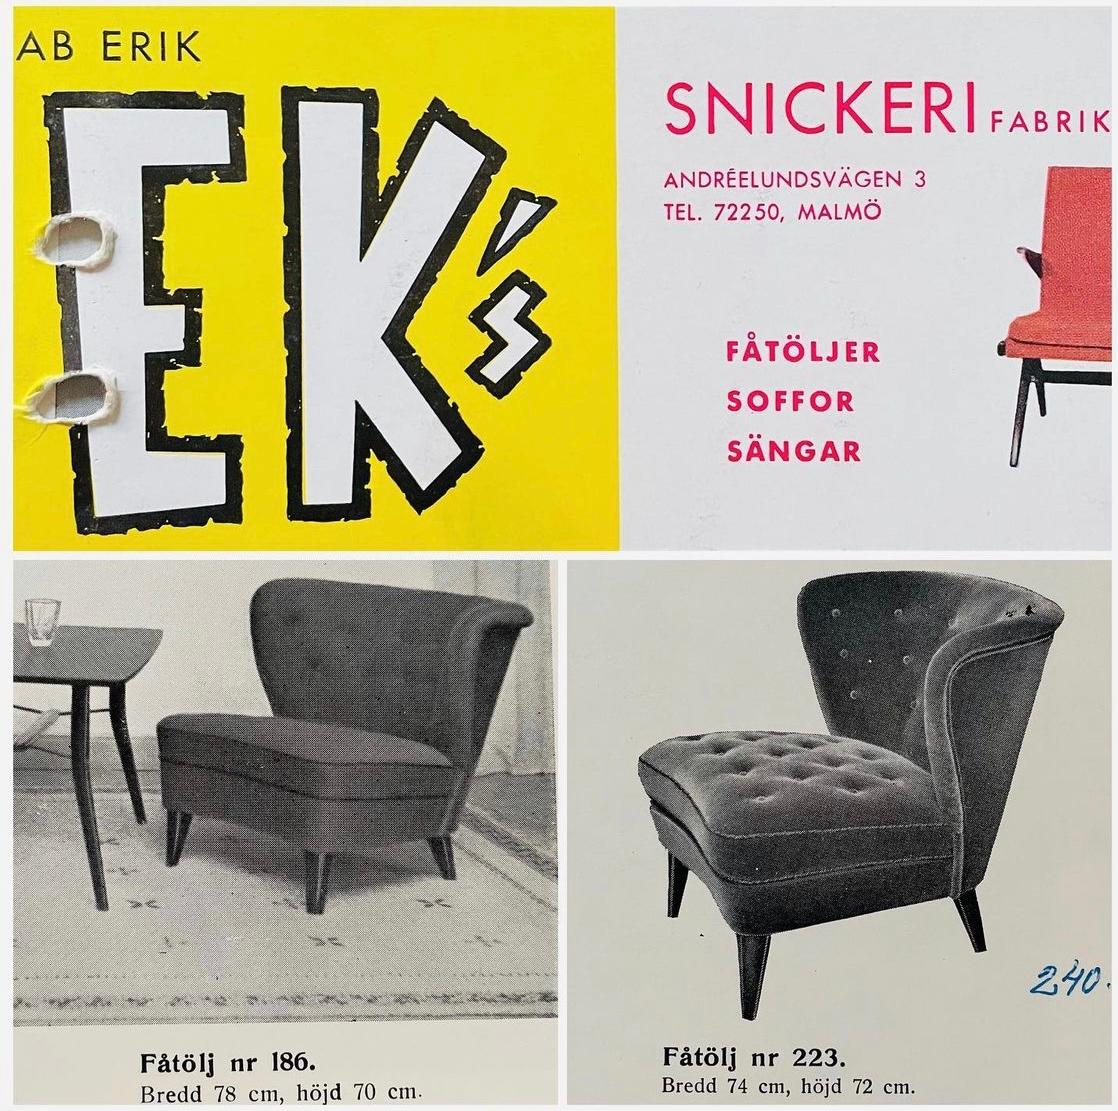 Easy Chair by AB Erik Ek's Snickerifabrik, Malmö, Sweden, 1940s 4